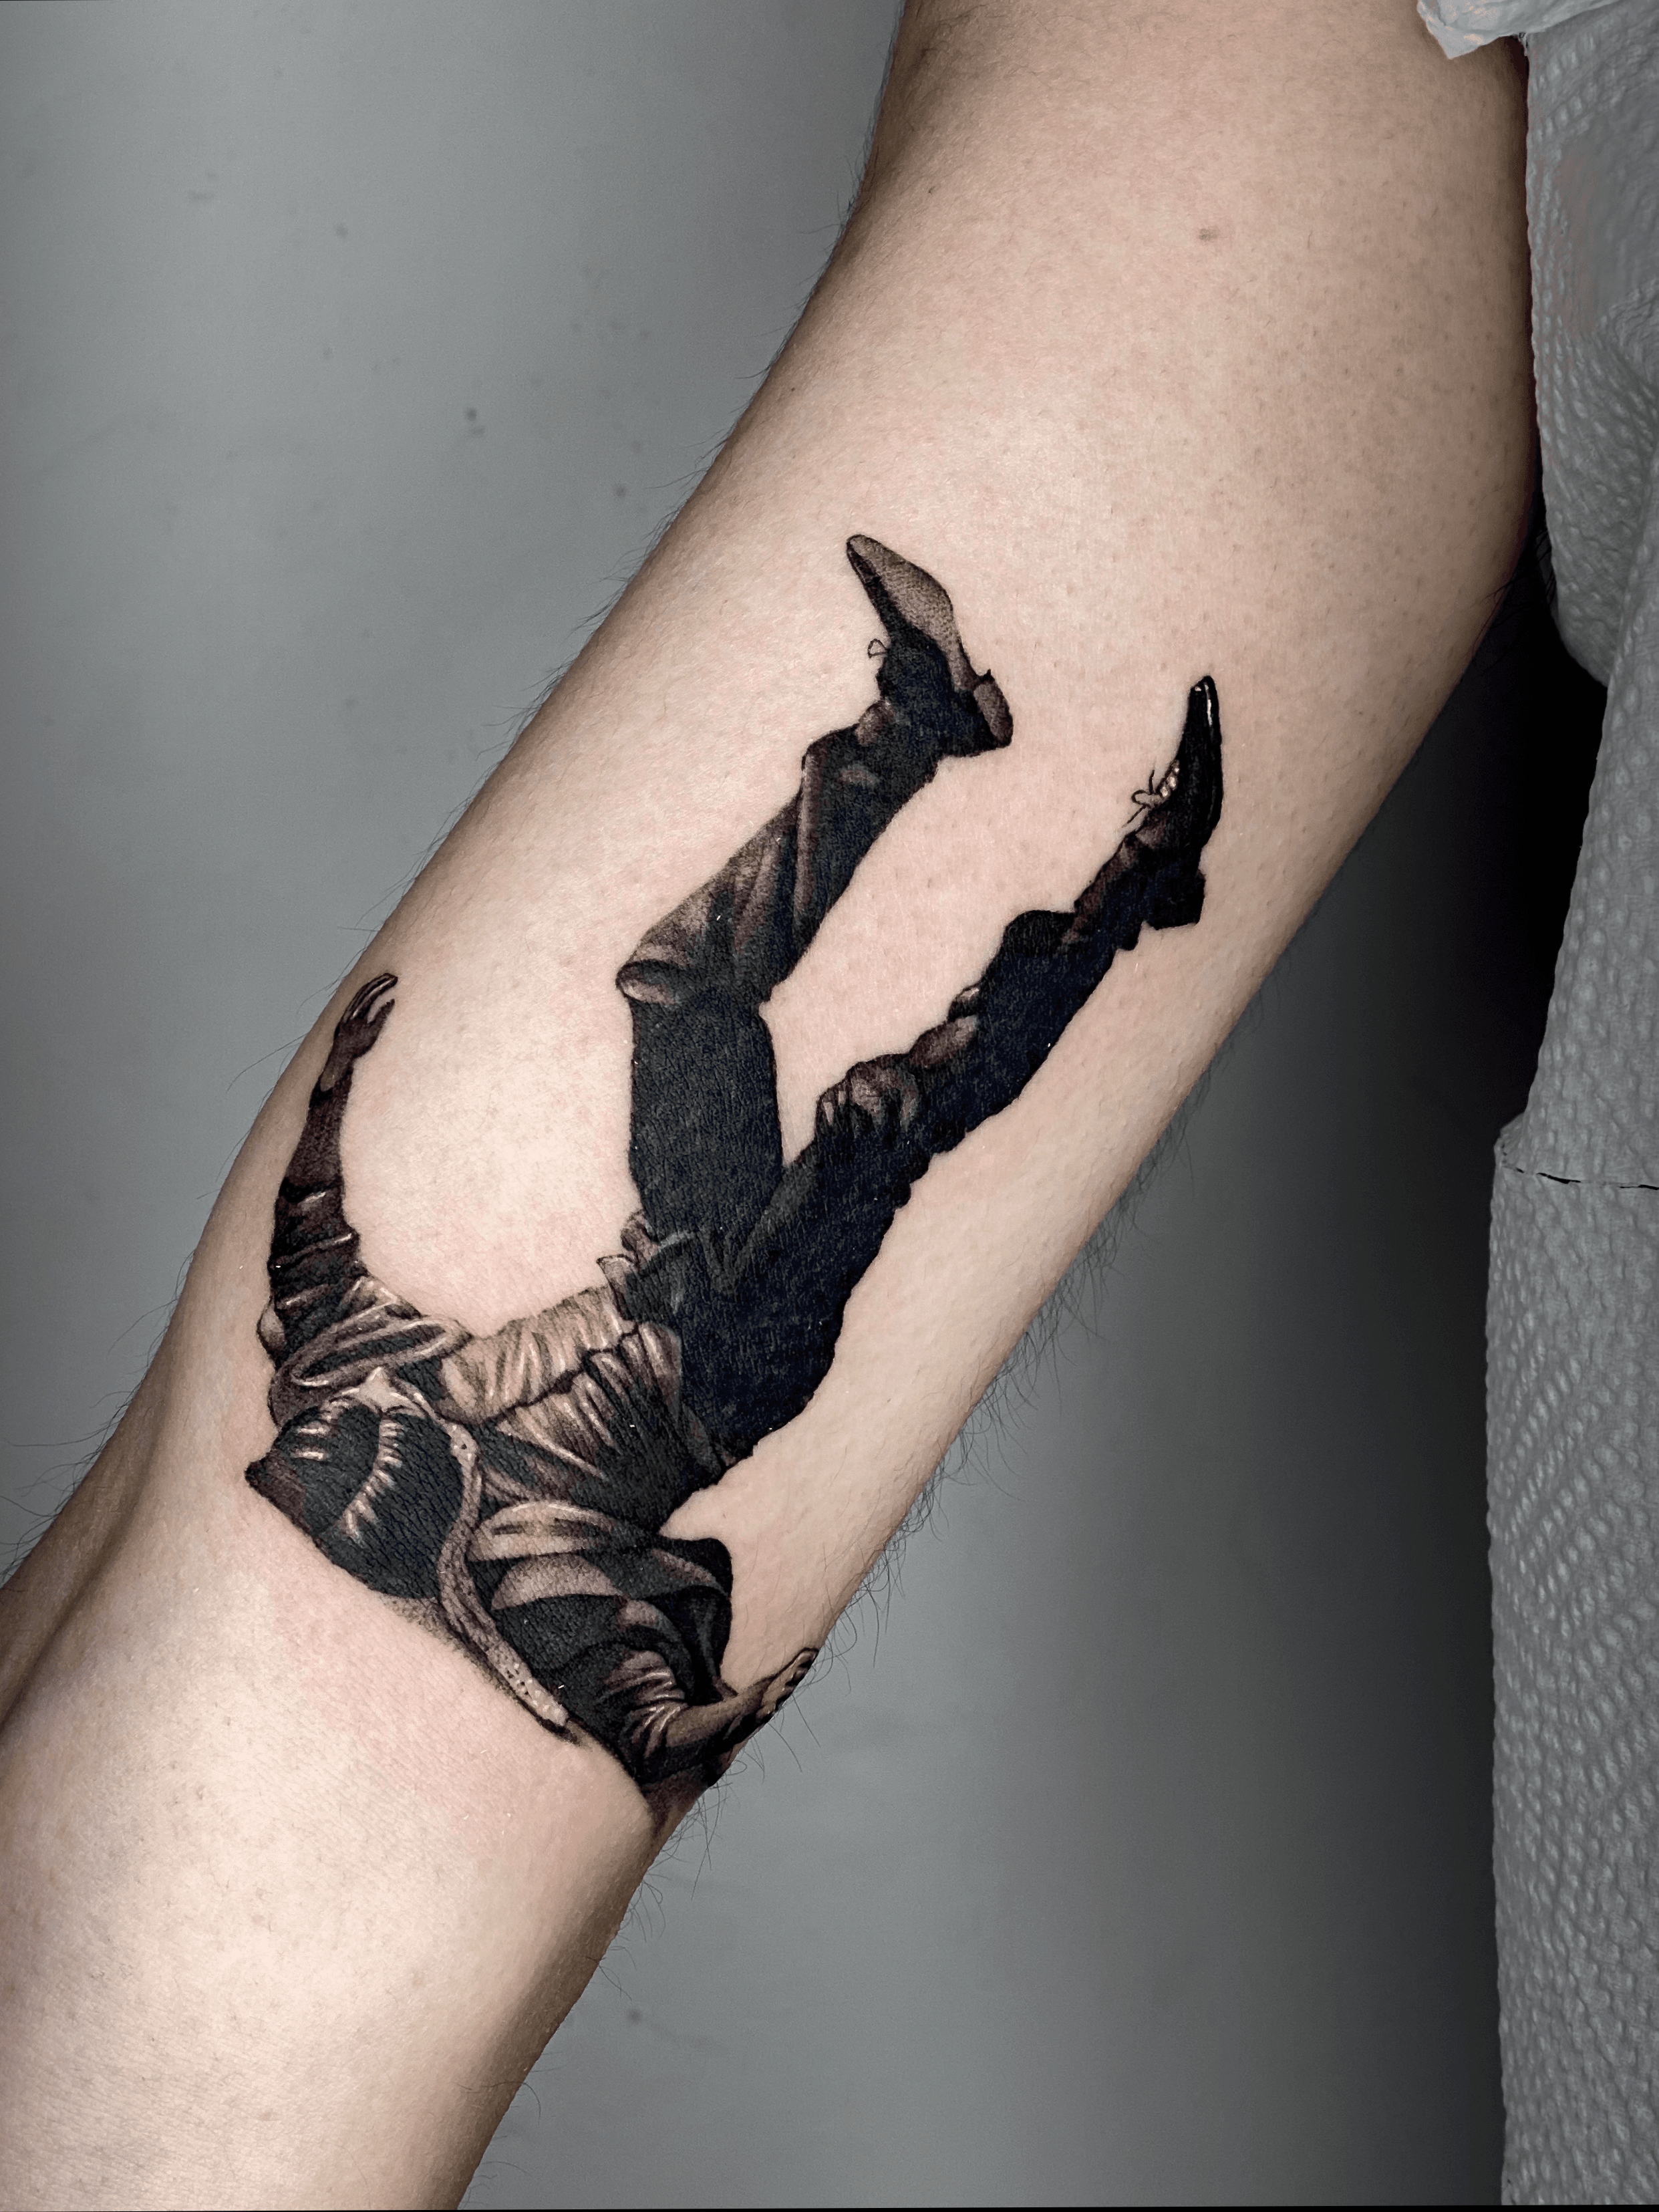 Tattoo Ness on Twitter Falling free Lashes tattooist tattoo inked  ink tattooart tattoos tattoodesign httpstcoIaUTtvItx1  X